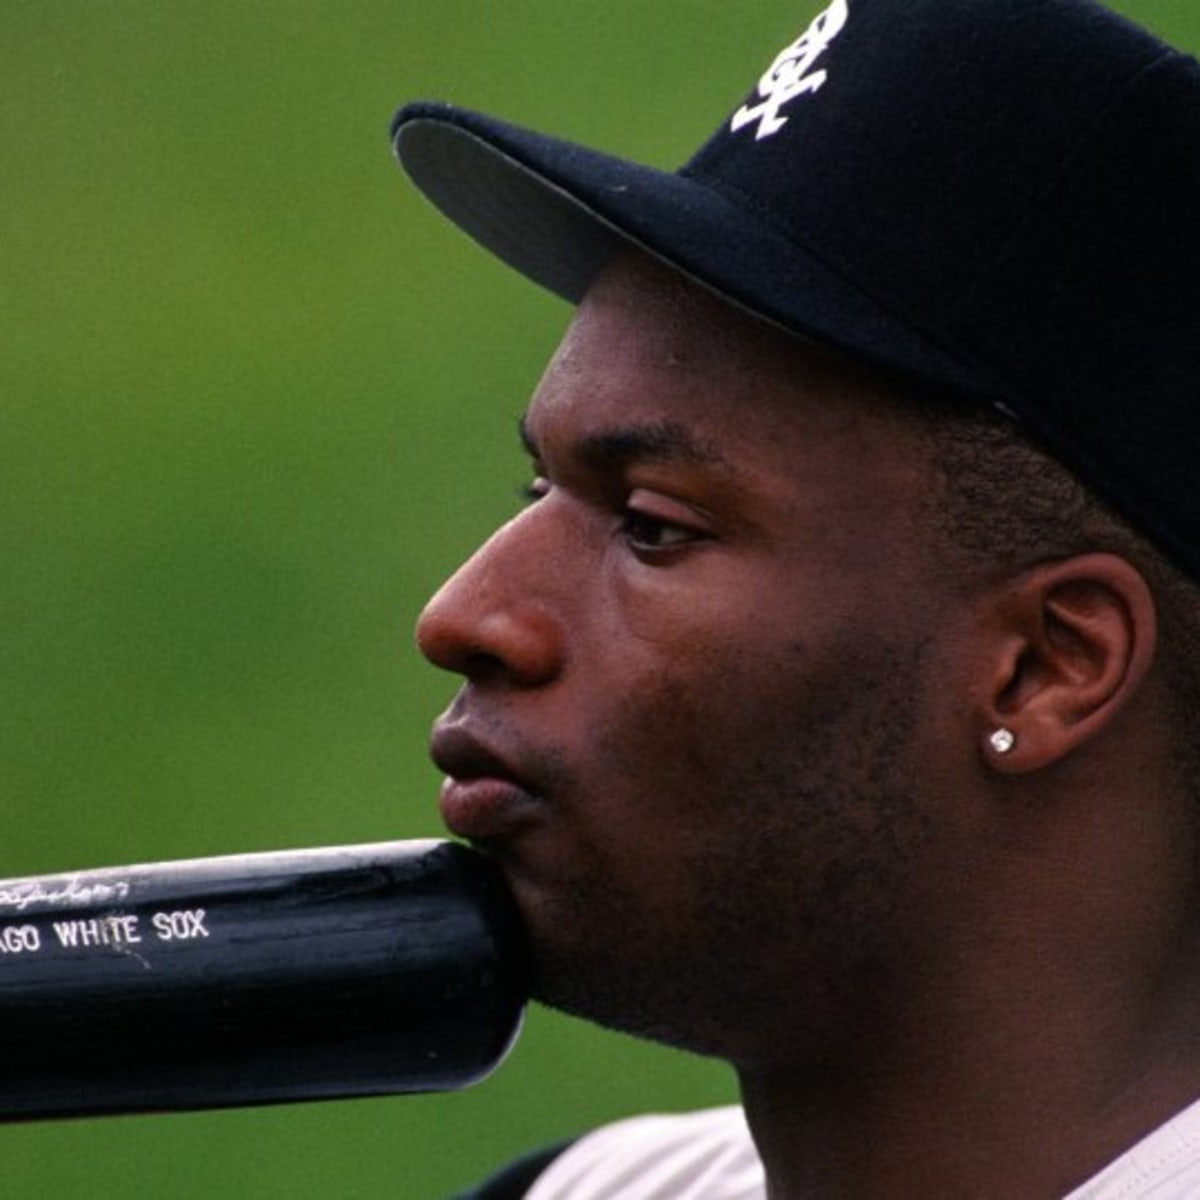 White Sox' Bo Jackson explains his career to teenager - Sports Illustrated